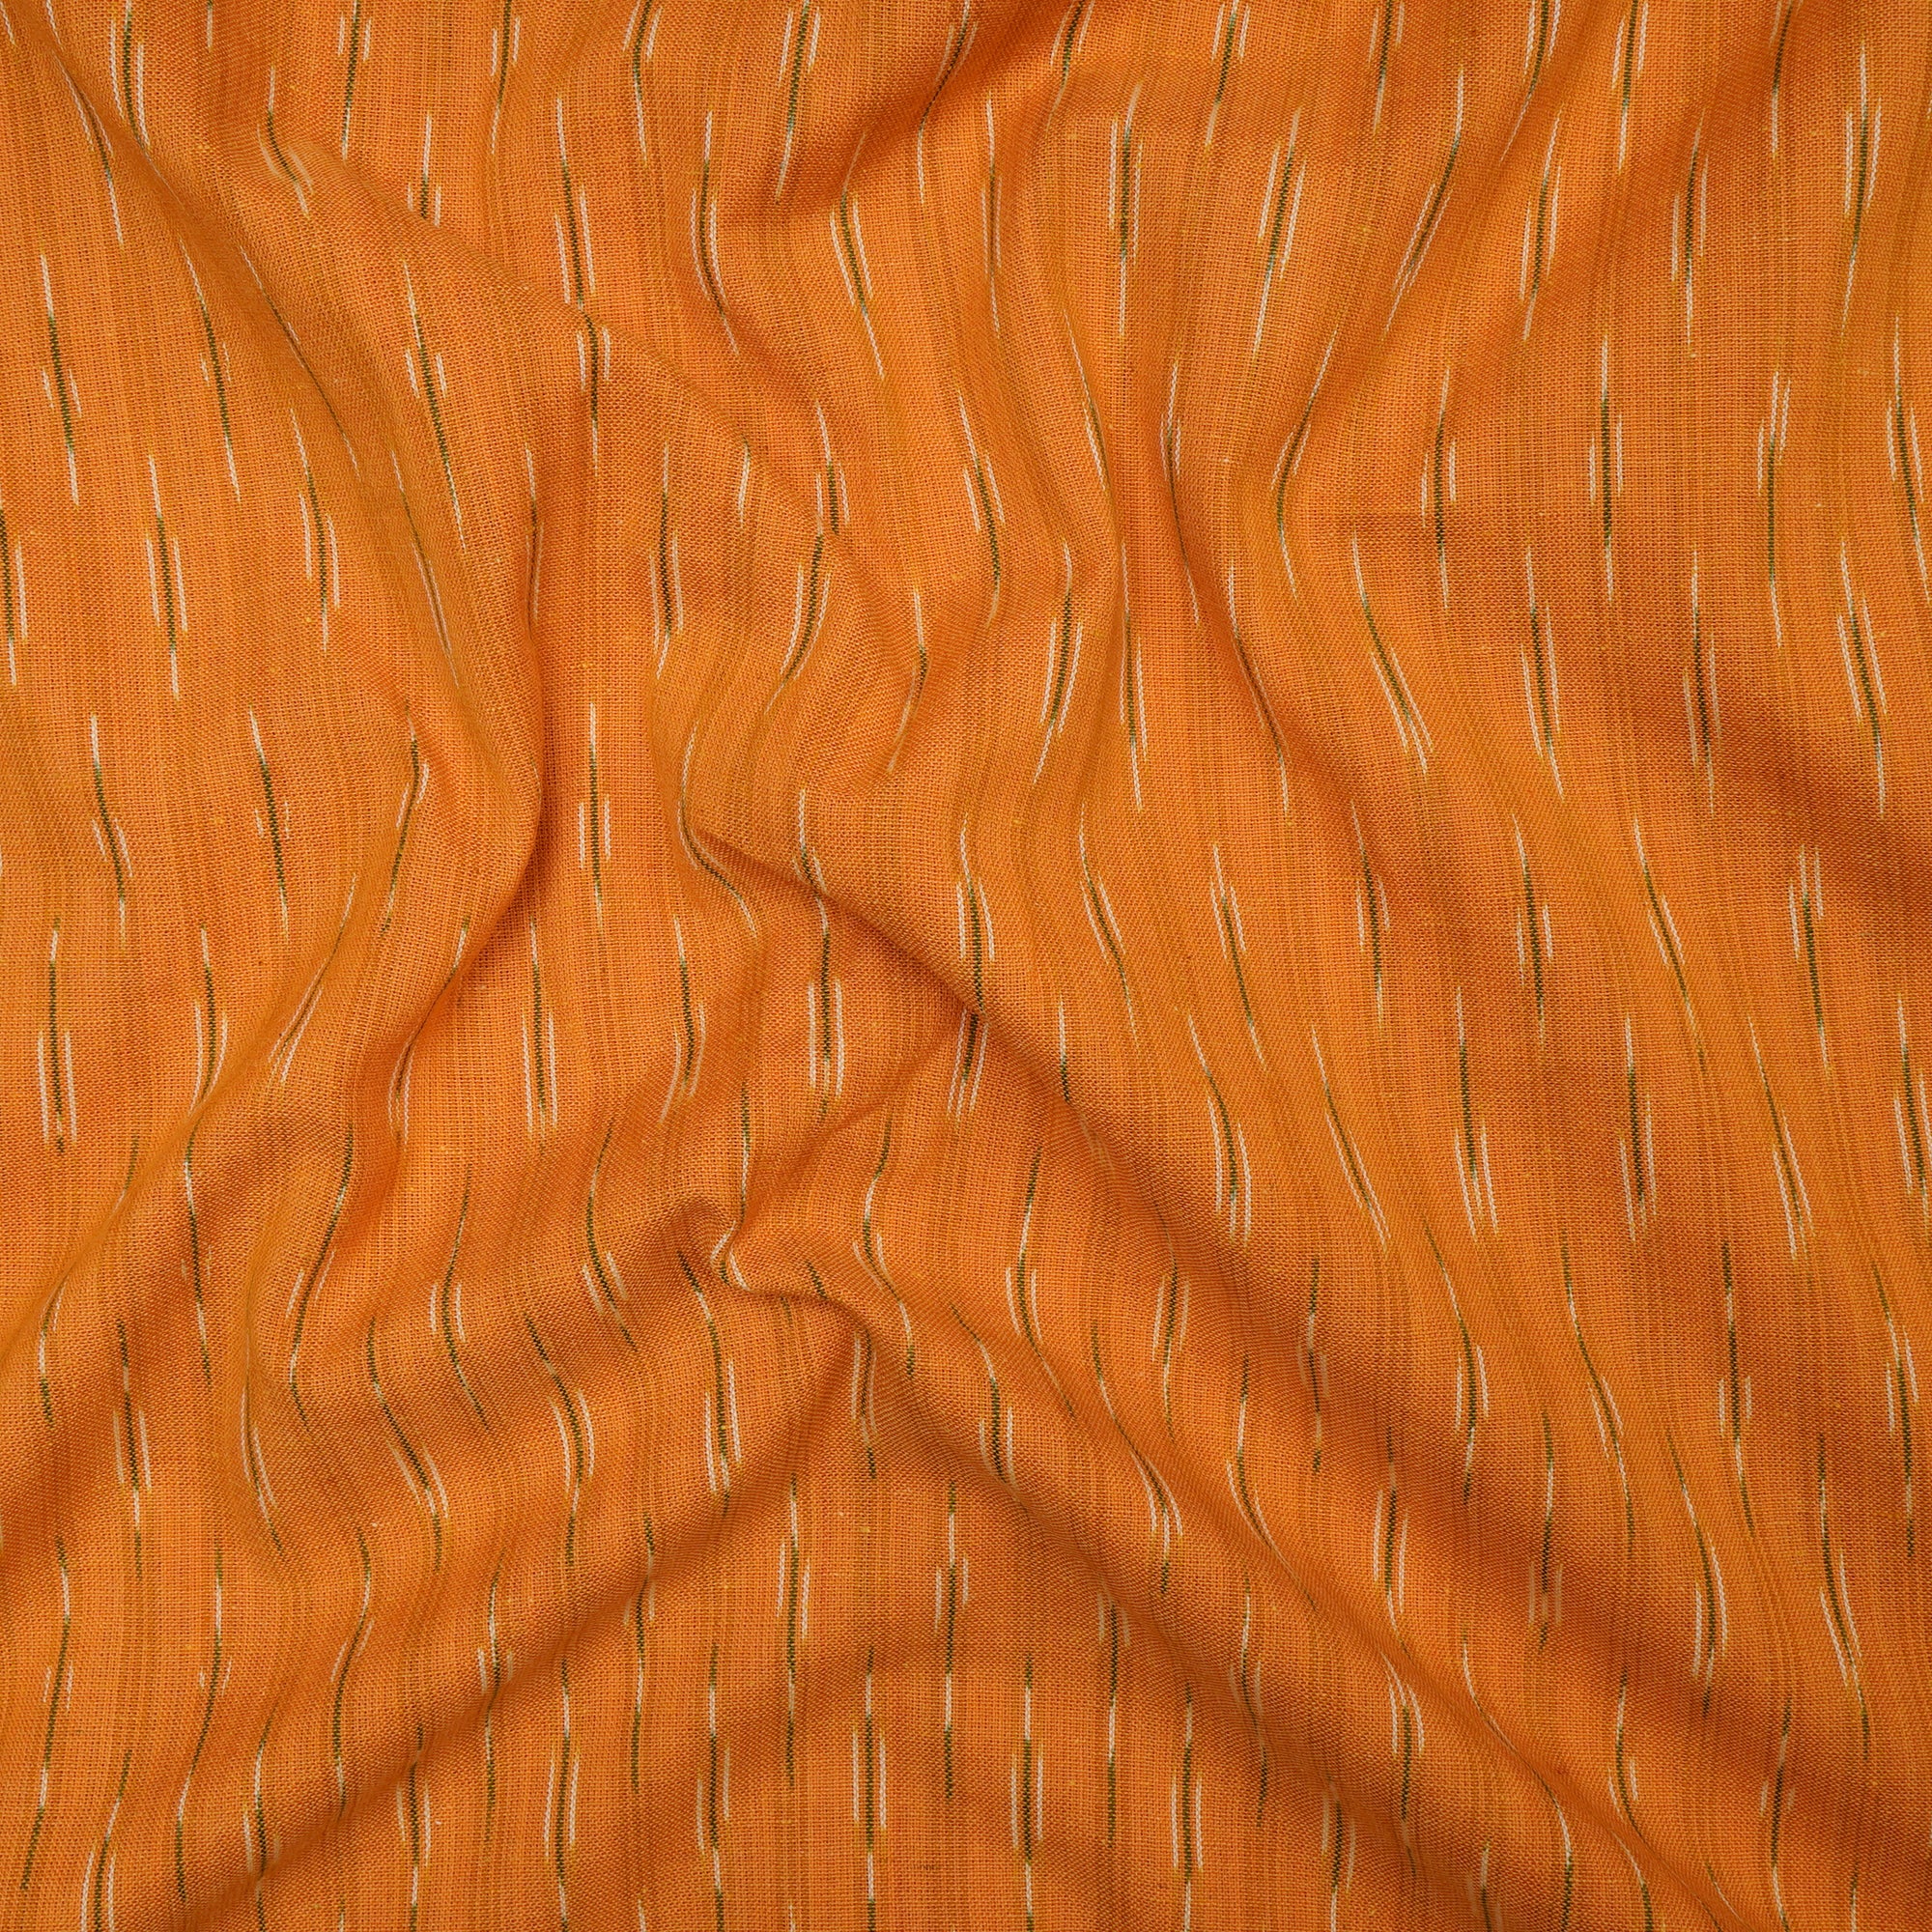 Neon Orange Washed Woven Ikat Cotton Fabric